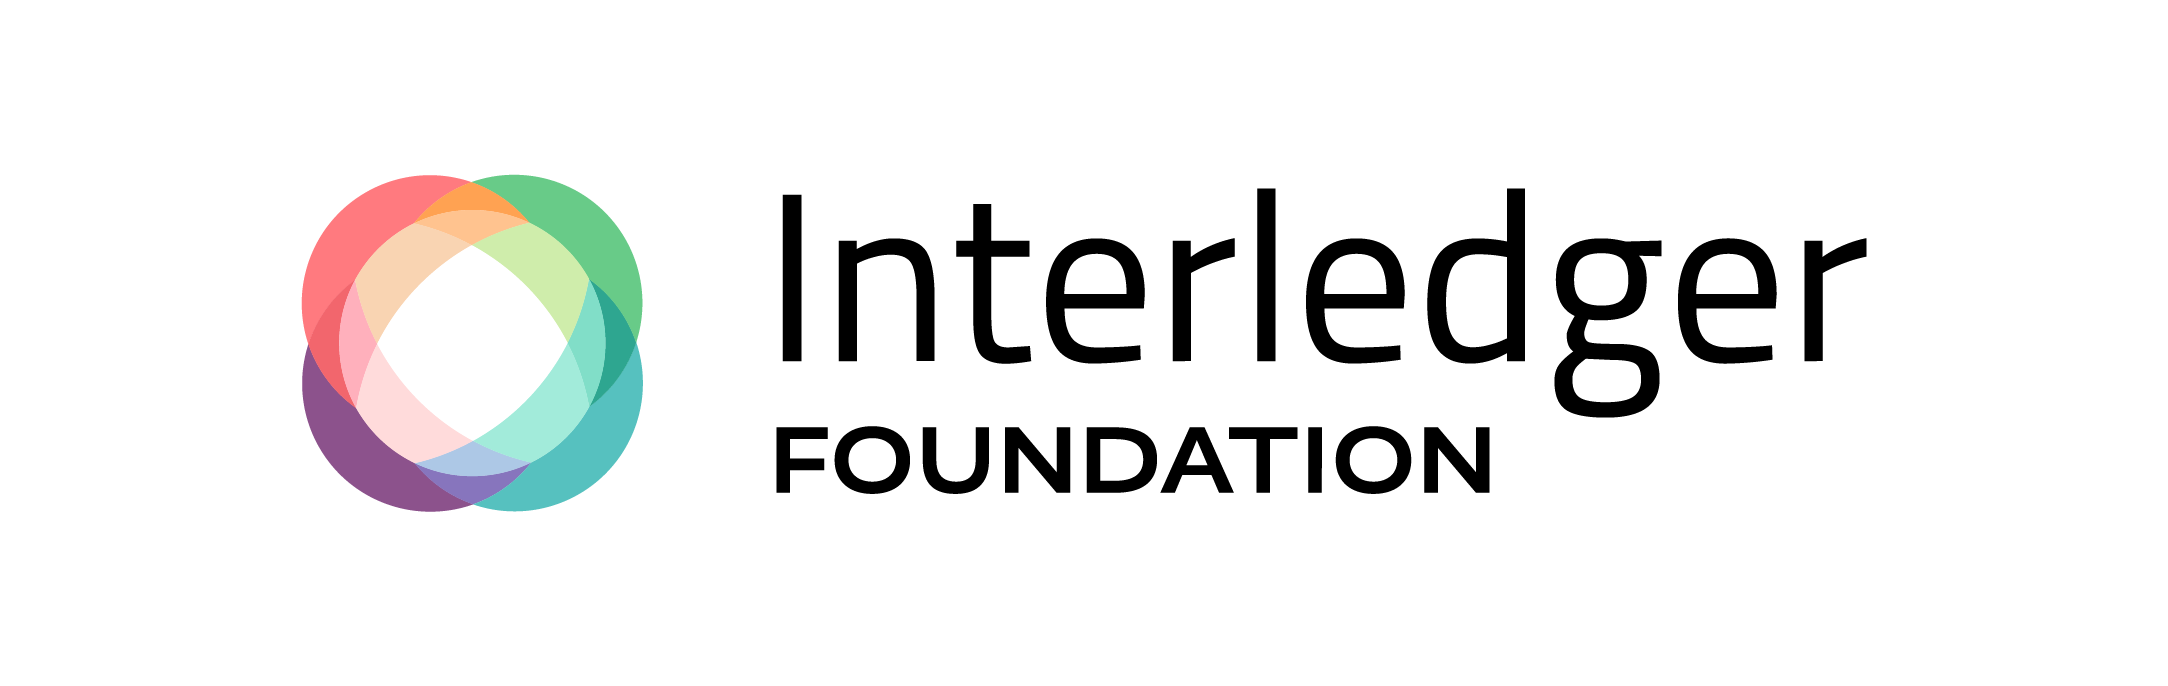 Interledger foundation logo